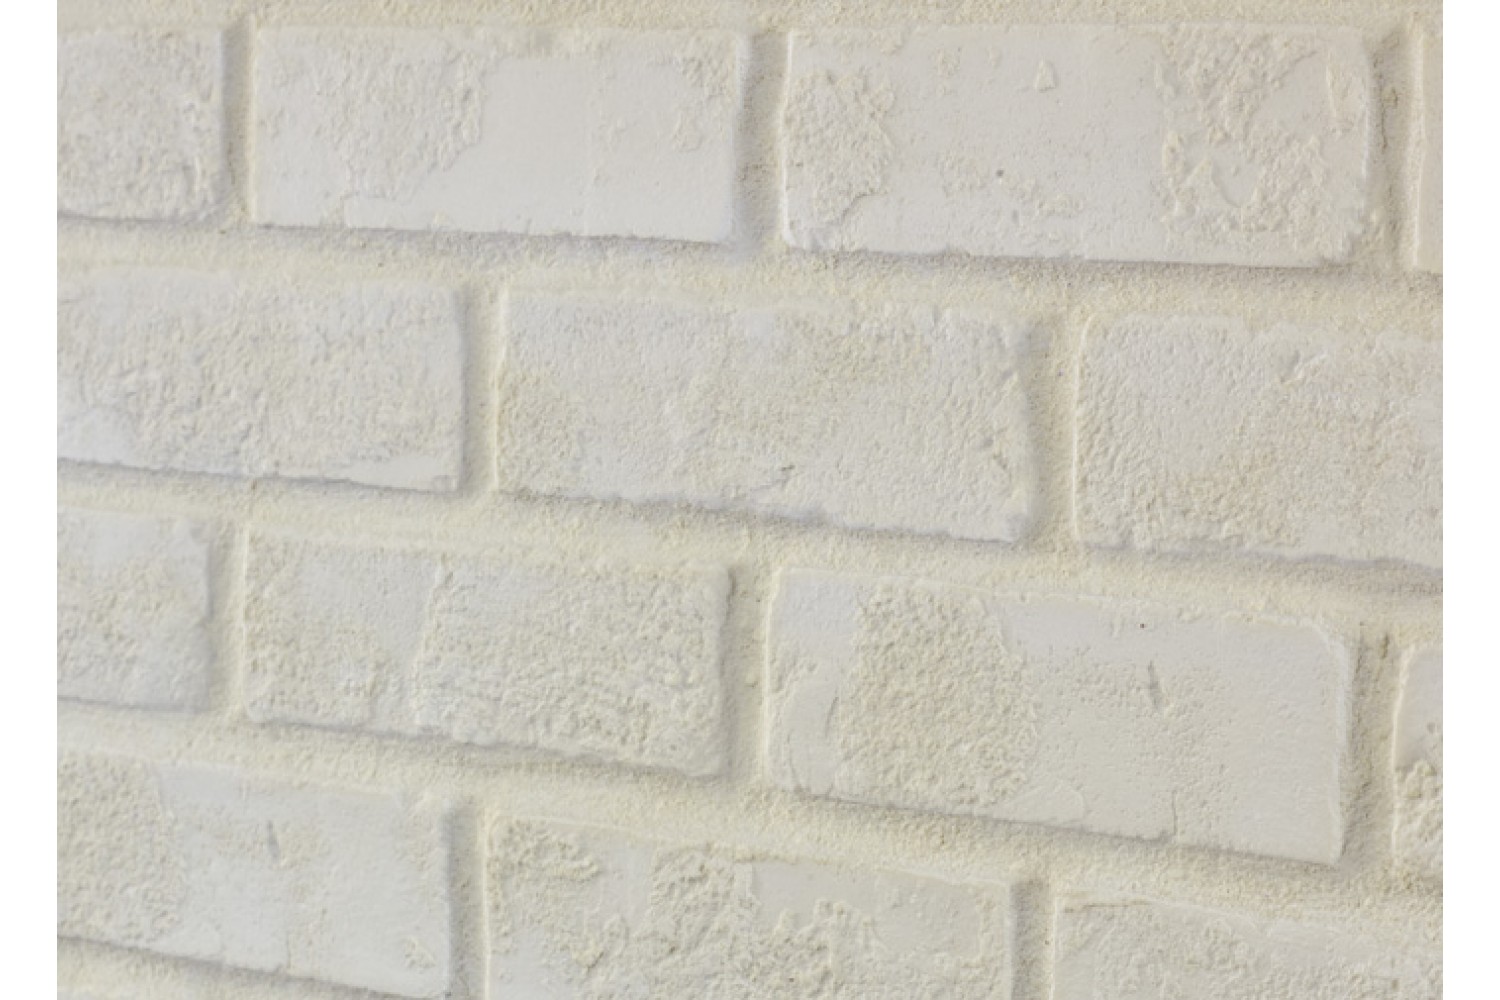 Rustic Brick Faux Wall Panels Standard